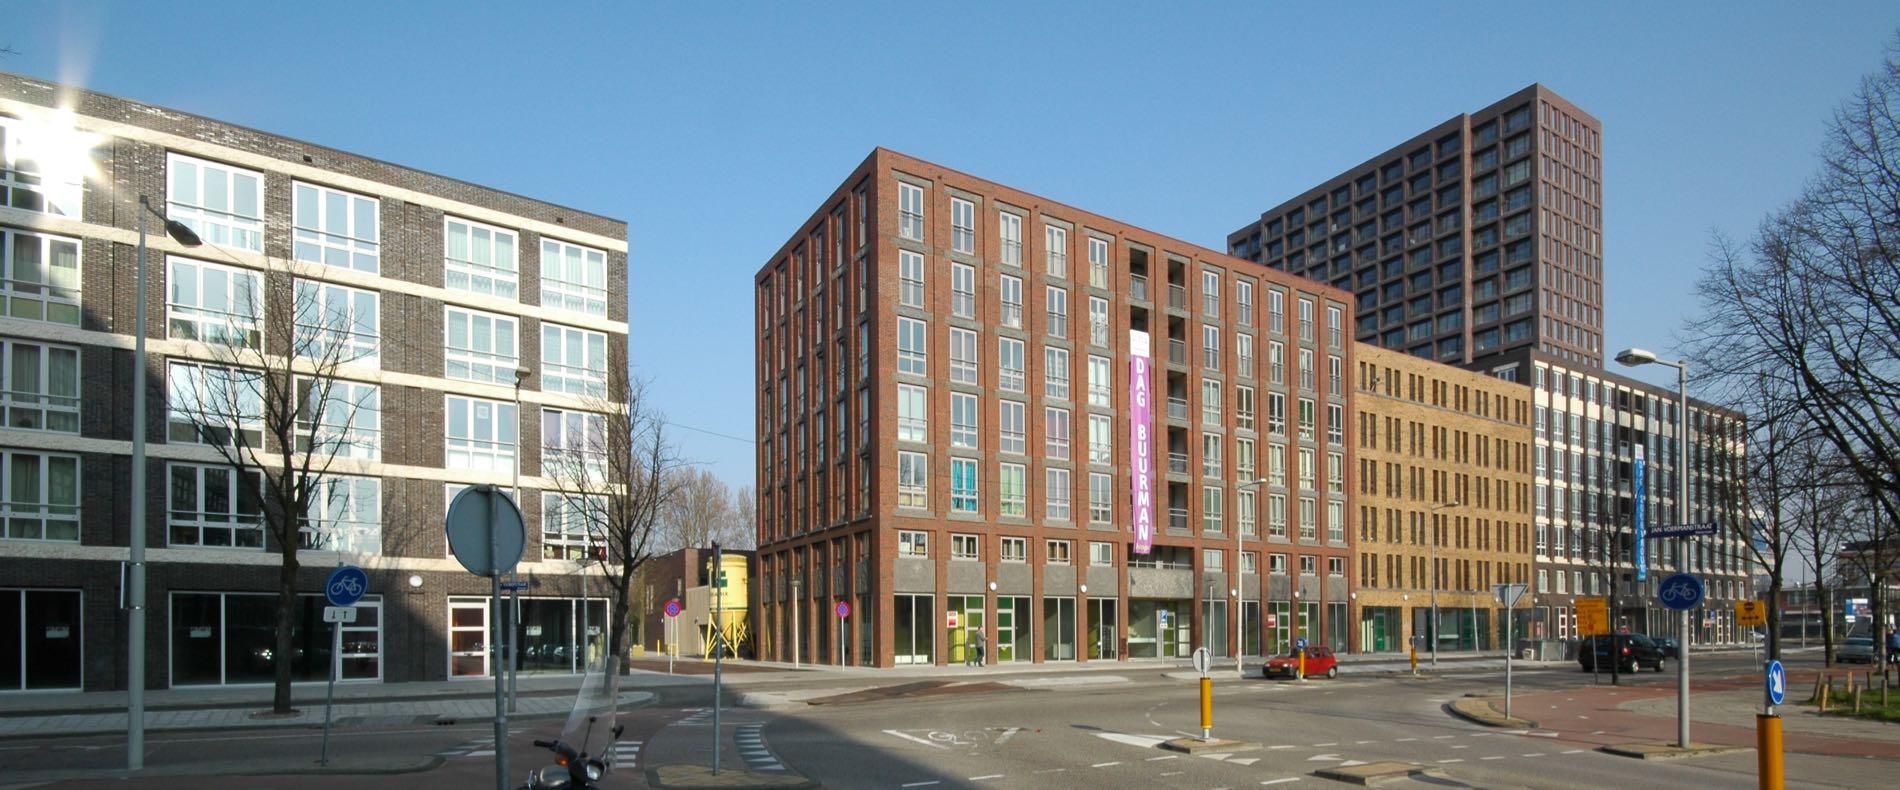 Appartementen Jatopa, Amsterdam - KENK Architecten 2a